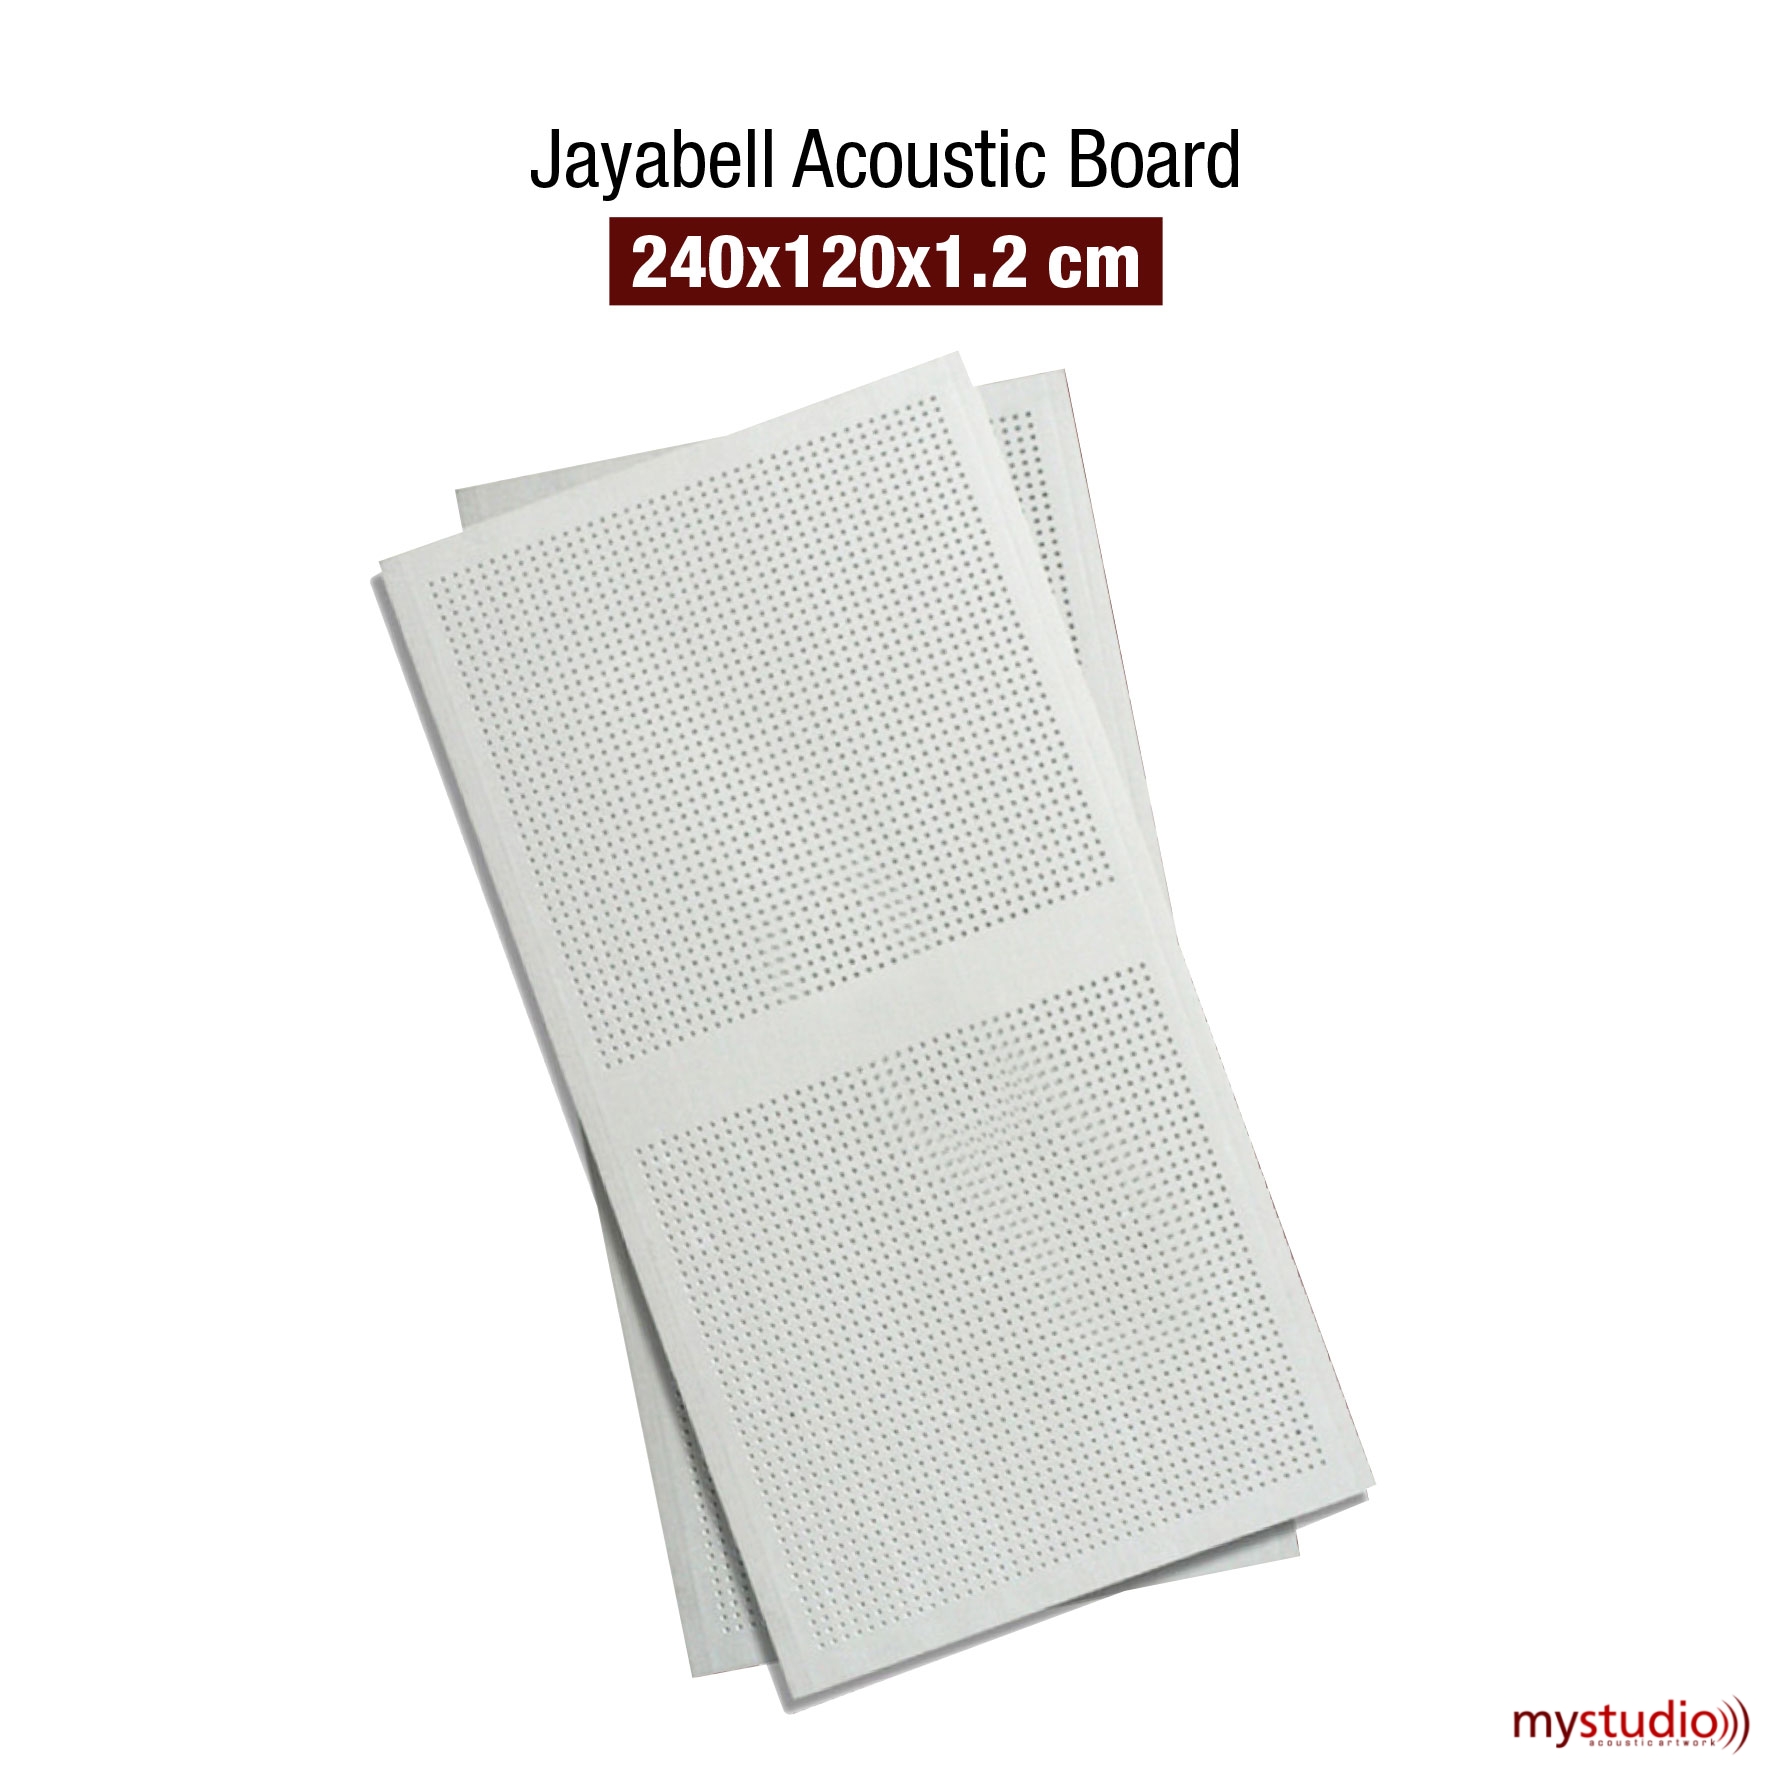 Jayabell Acoustic Board - Produk Mystudio